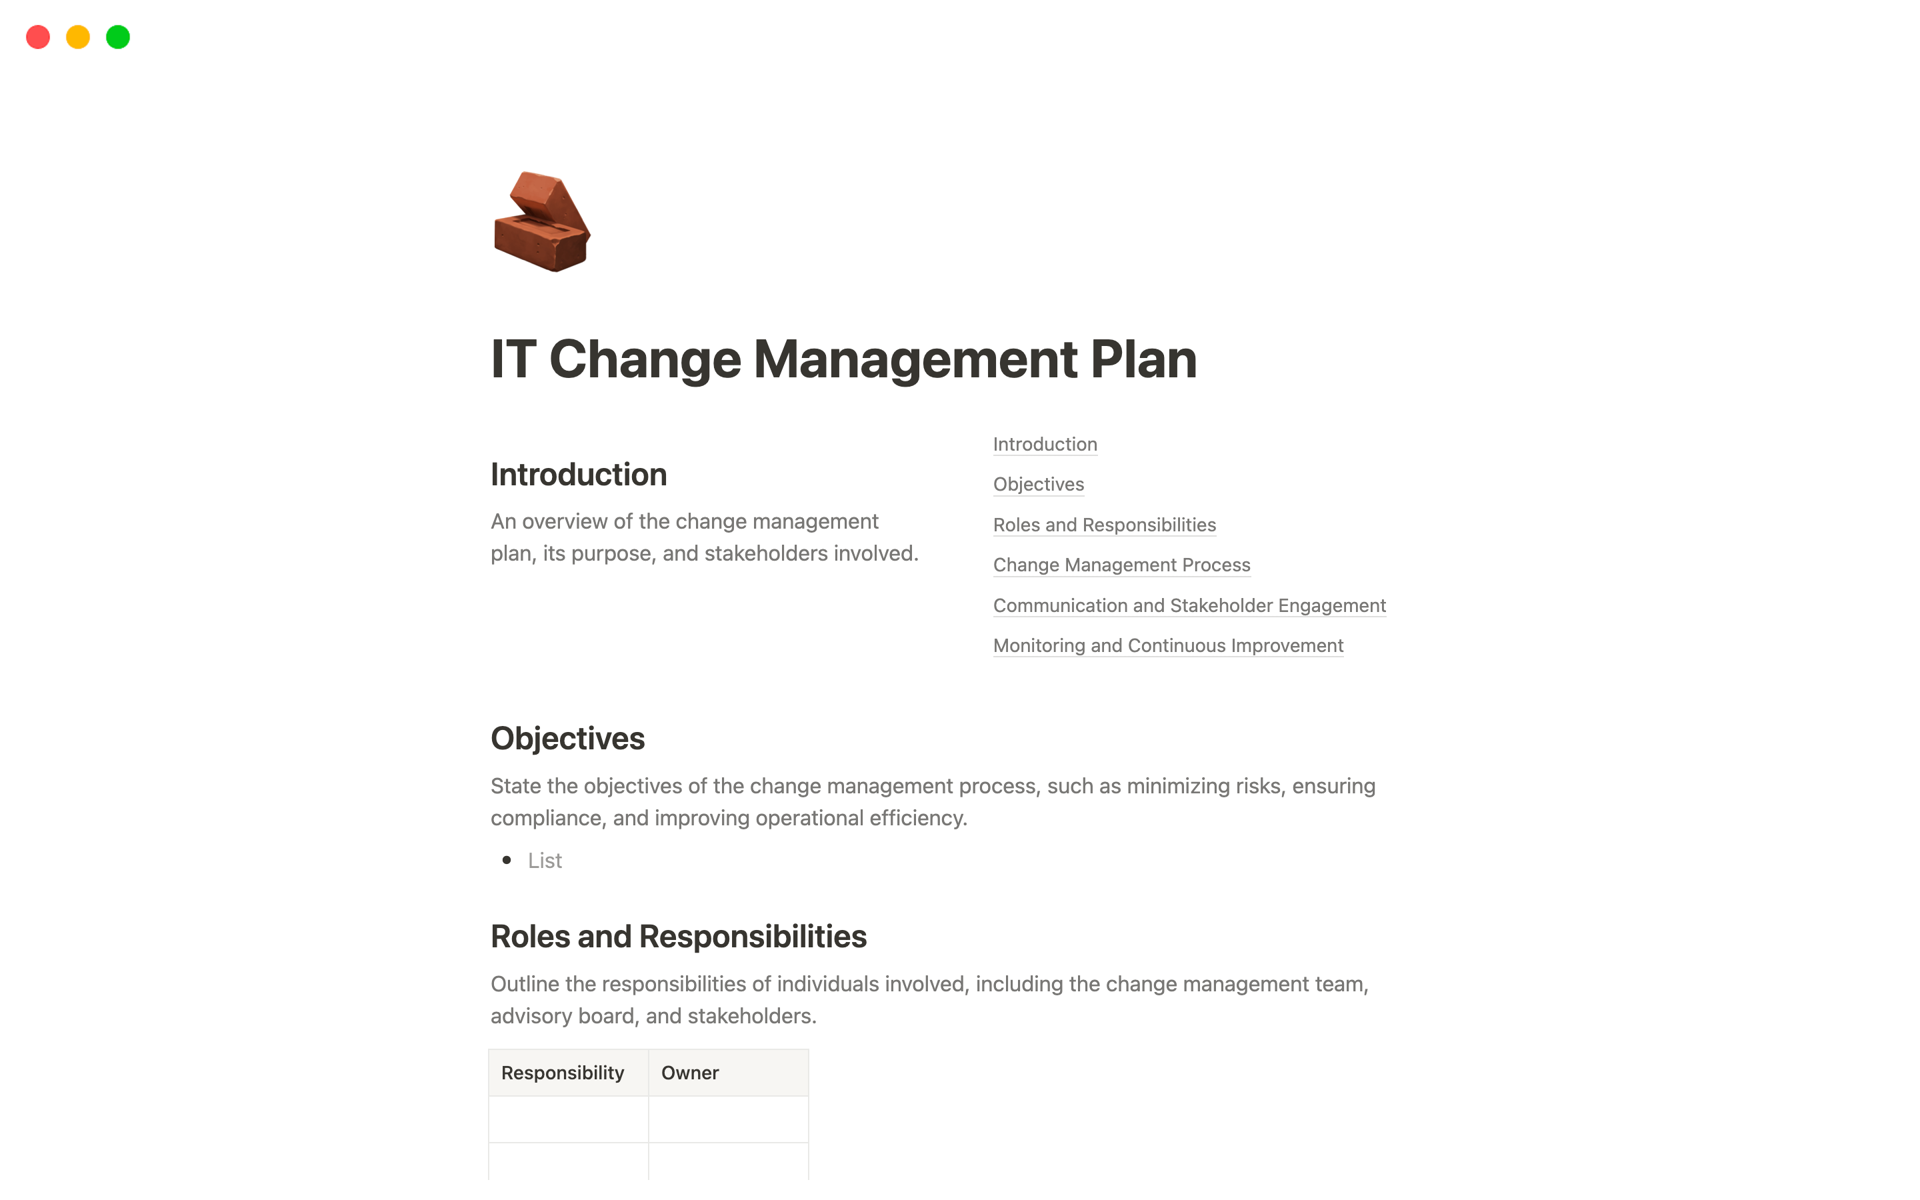 Vista previa de una plantilla para IT Change Management Plan